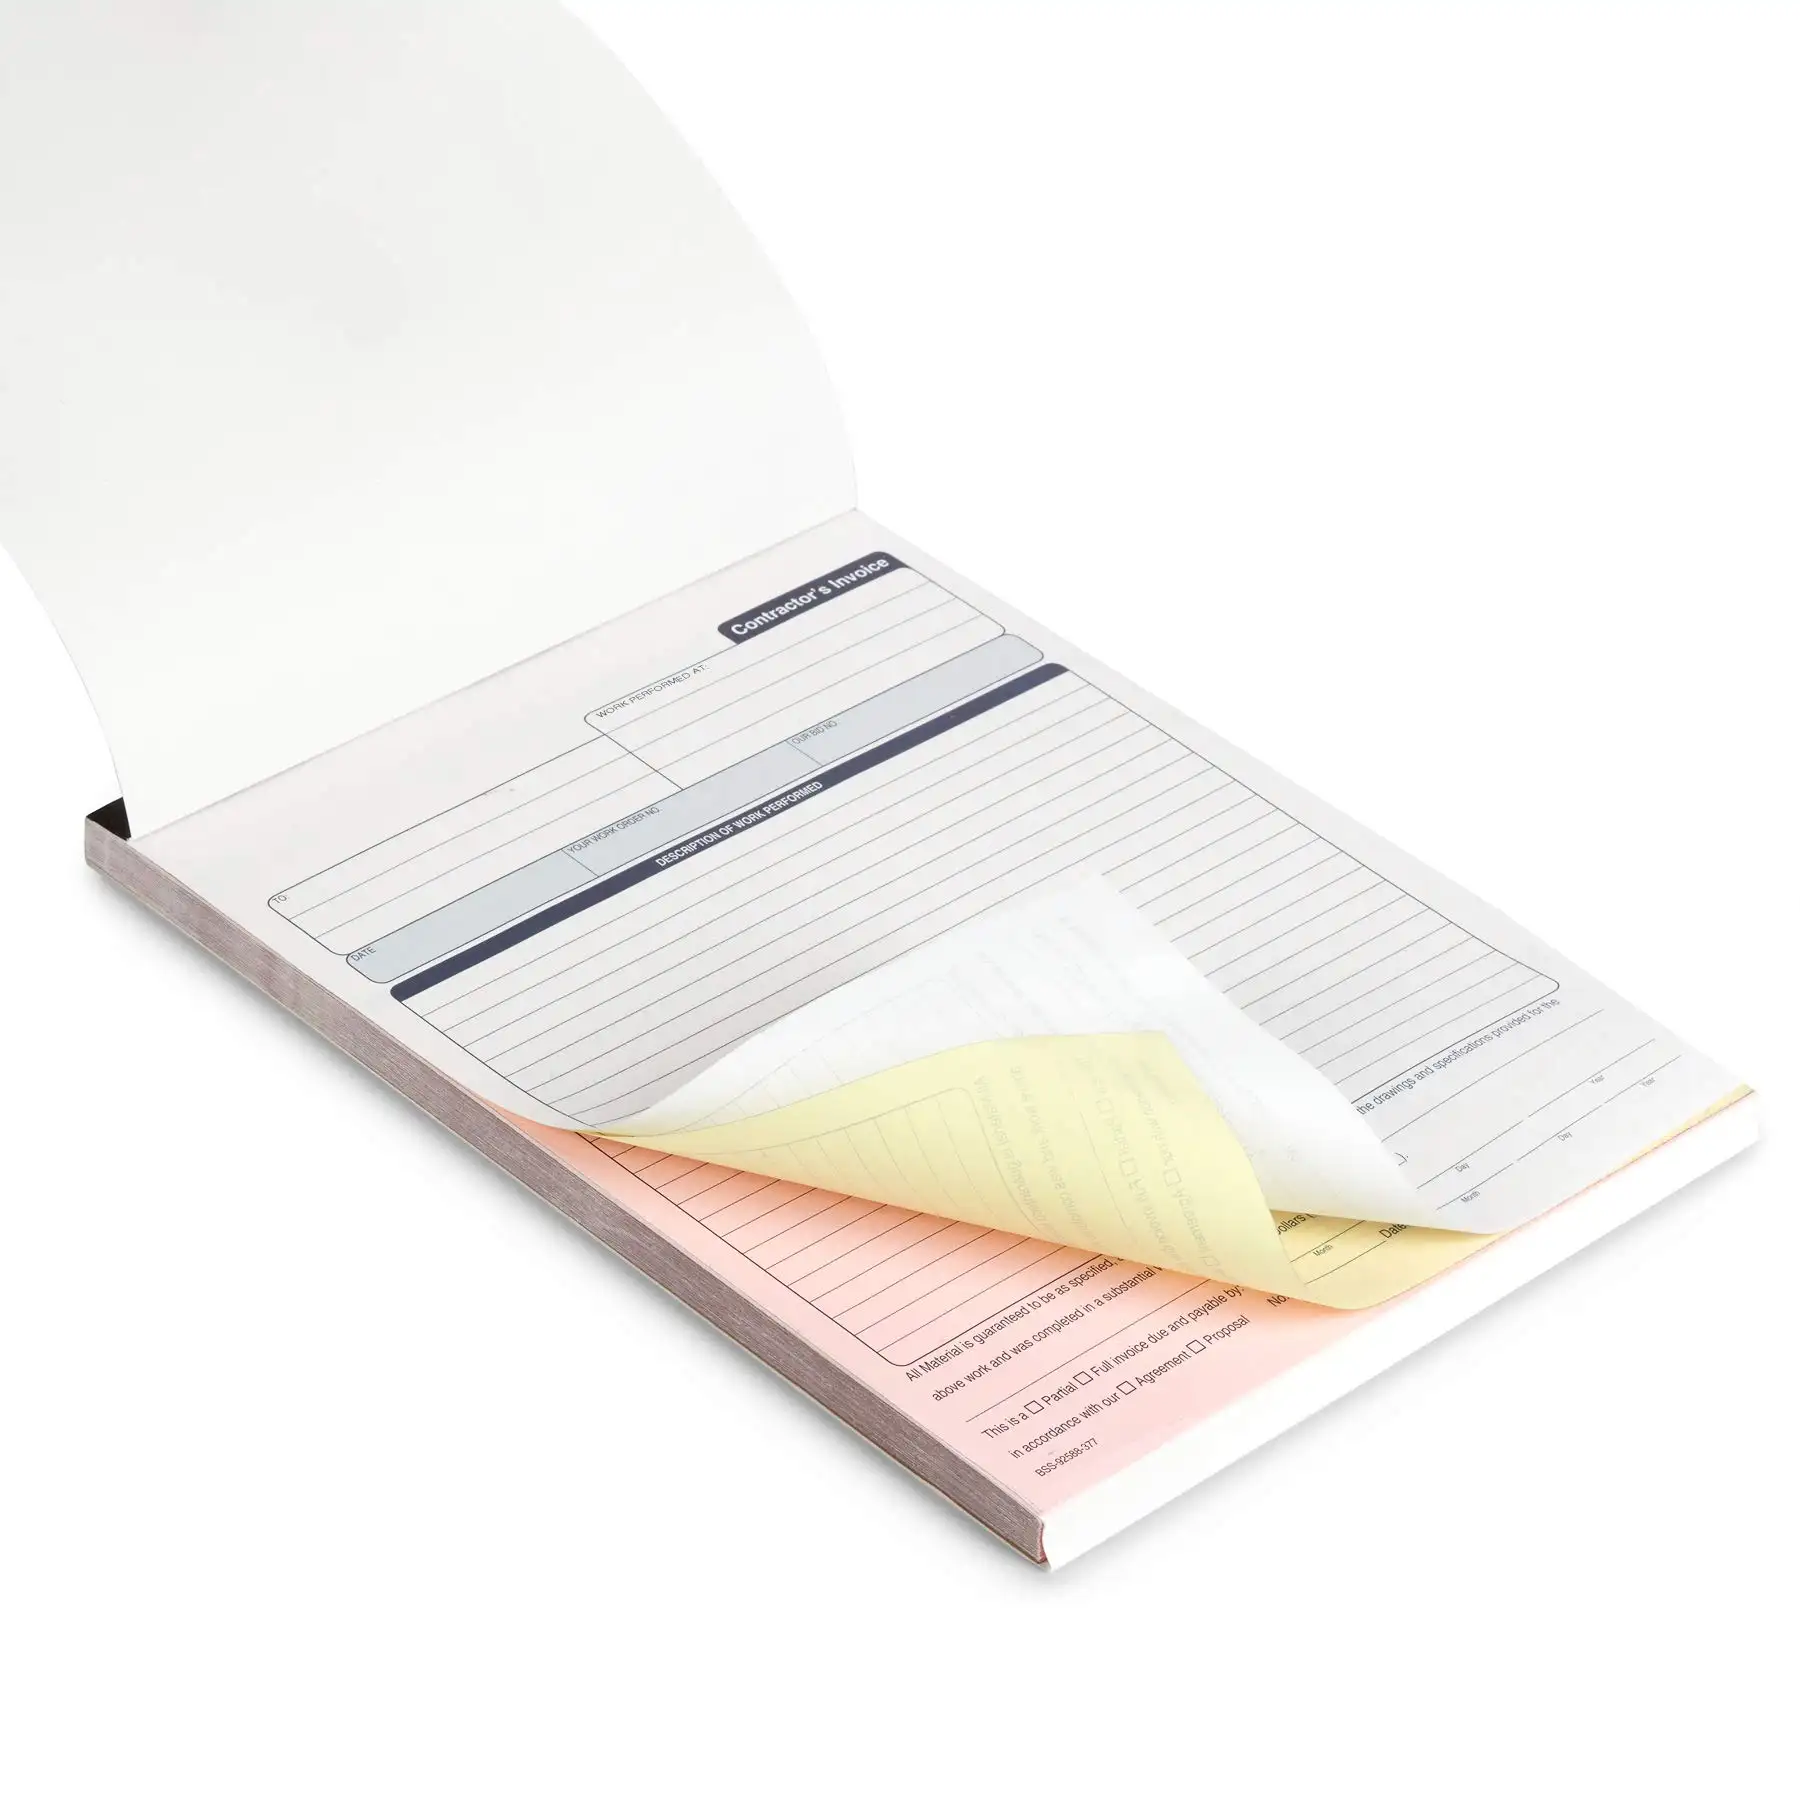 Penjualan bisnis disesuaikan buku tagihan uang tunai duplikat tanda terima pesanan kertas tanpa karbon warna cmyk desain cetak